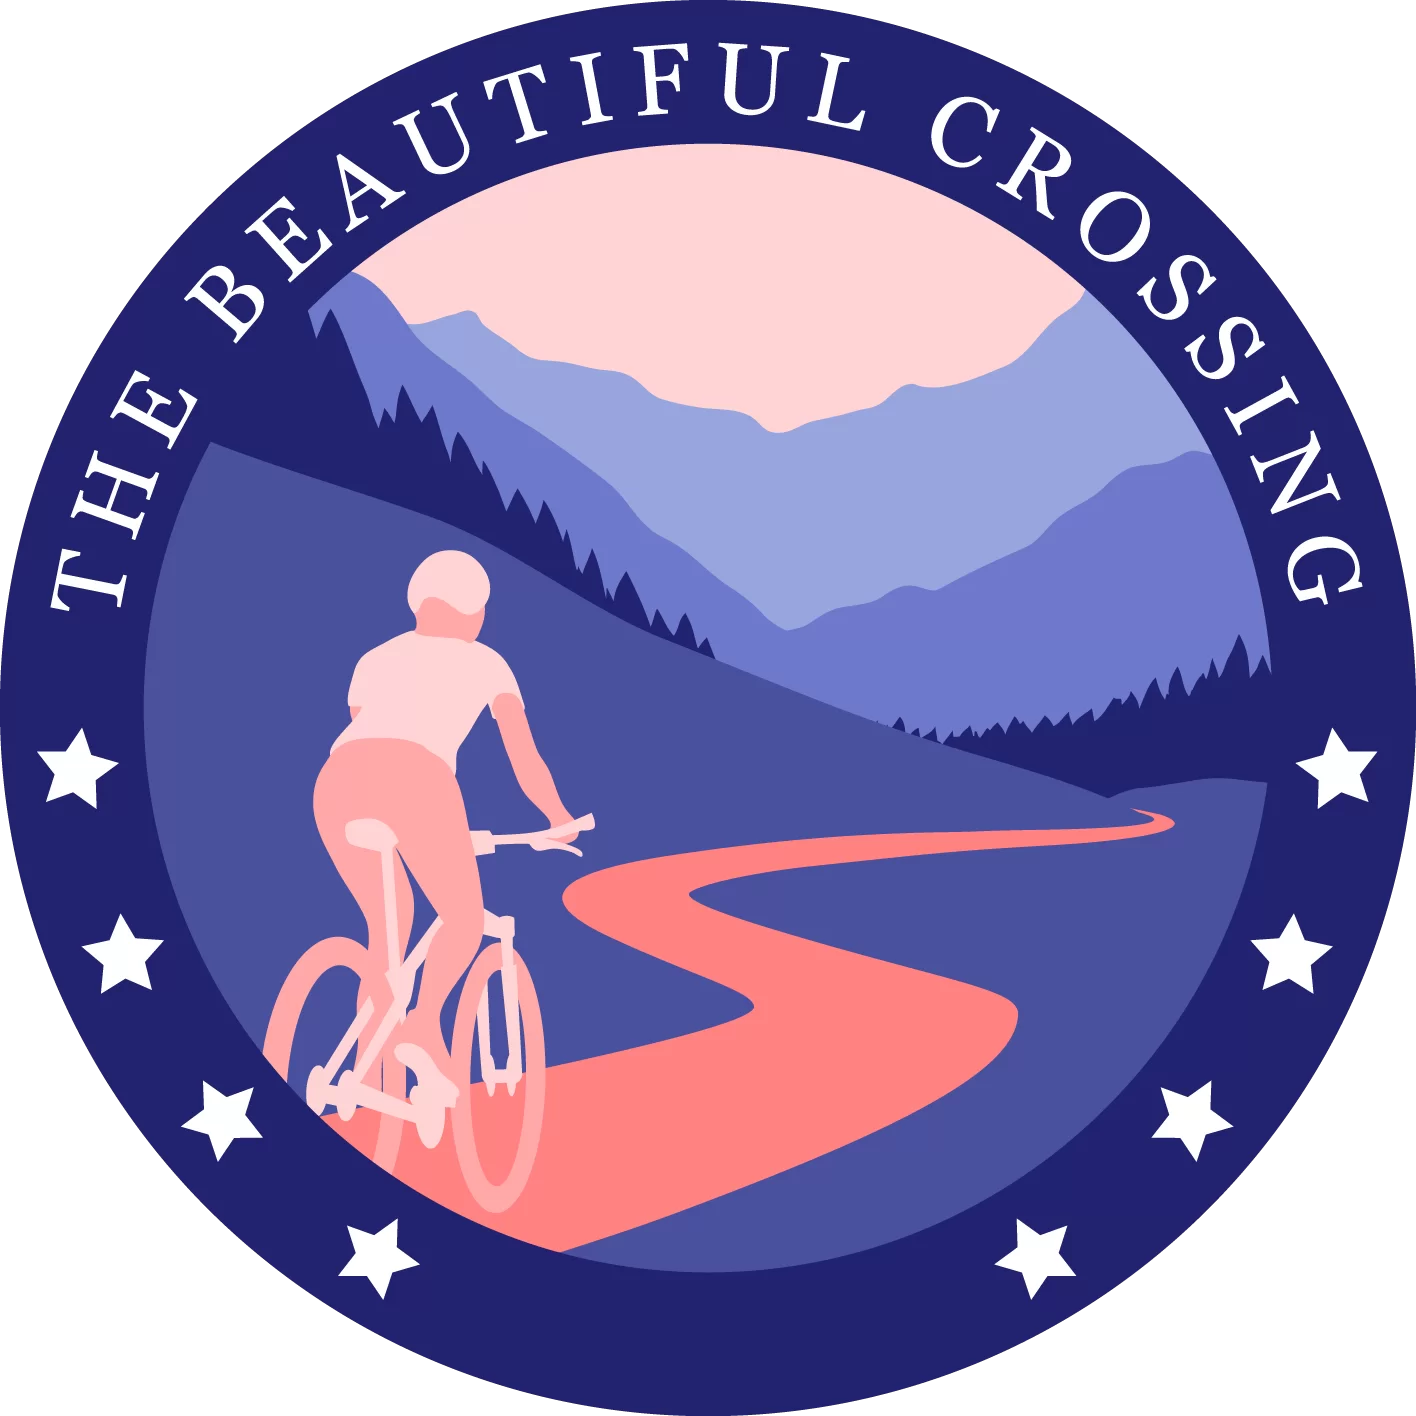 The Beautiful Crossing